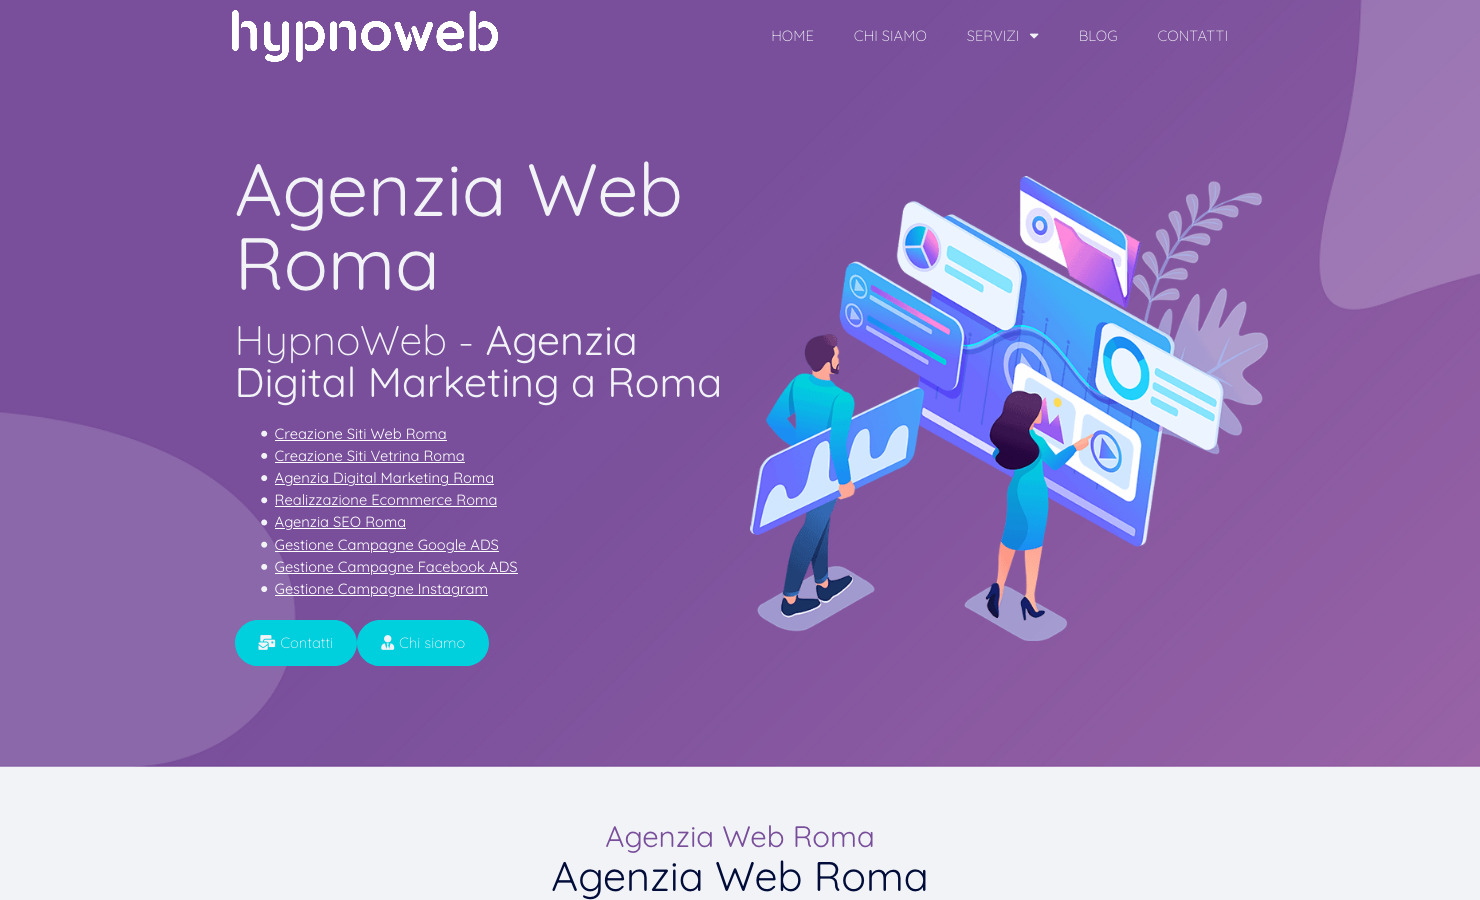 HypnoWeb Agenzia Web Roma